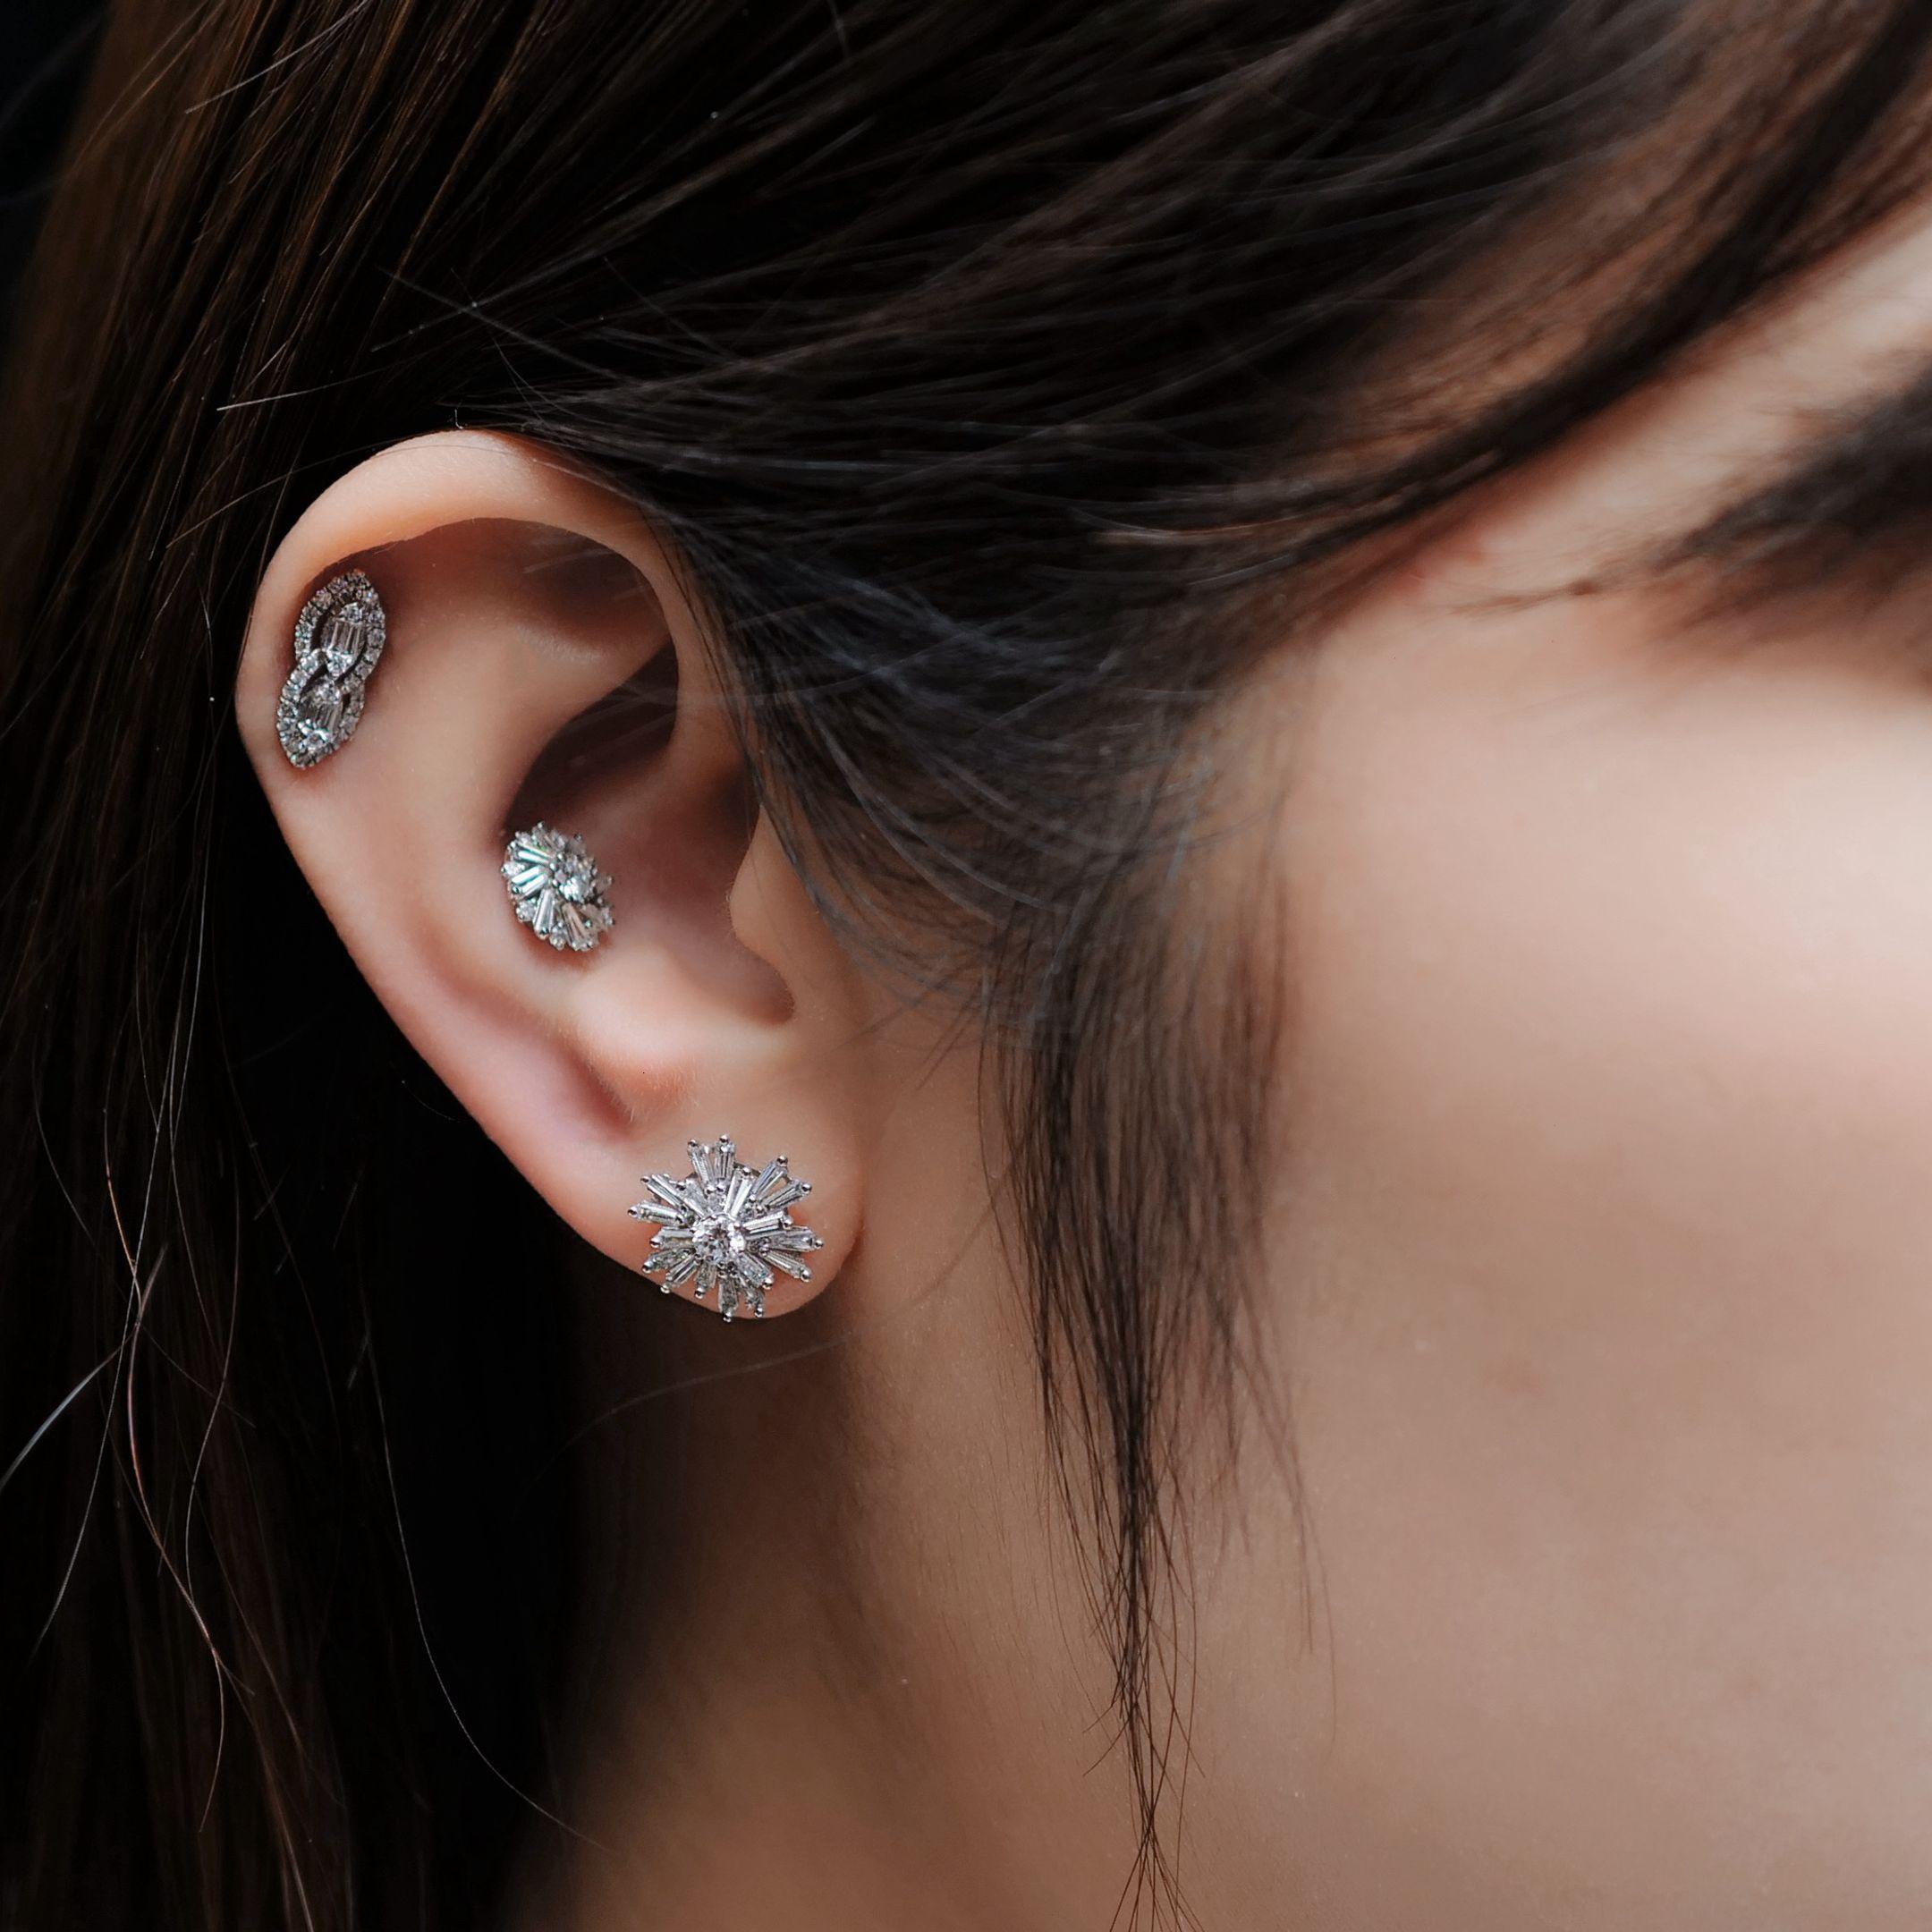 Diamond Starburst Earrings  1.756g 18K White Gold  1.22 Carats Diamond

Exuding brilliance and sophistication, these diamond starburst earrings are a true marvel. Crafted in 18K white gold, these earrings feature a captivating burst pattern that